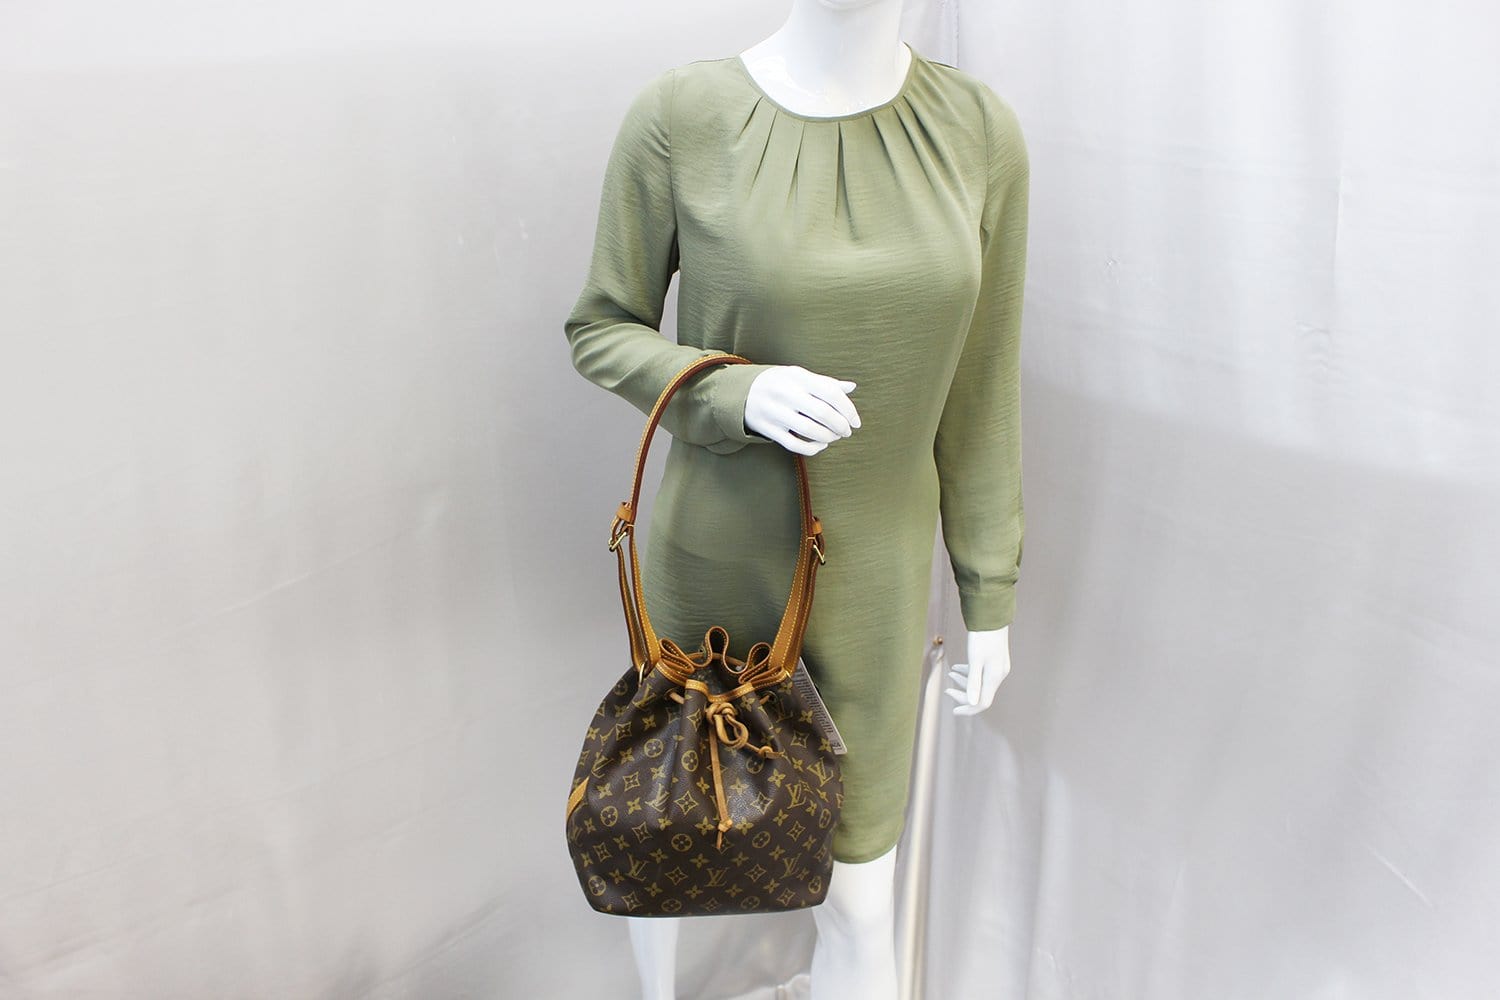 Louis Vuitton Monogram Petit Noe Shoulder Bag Handbag Browns